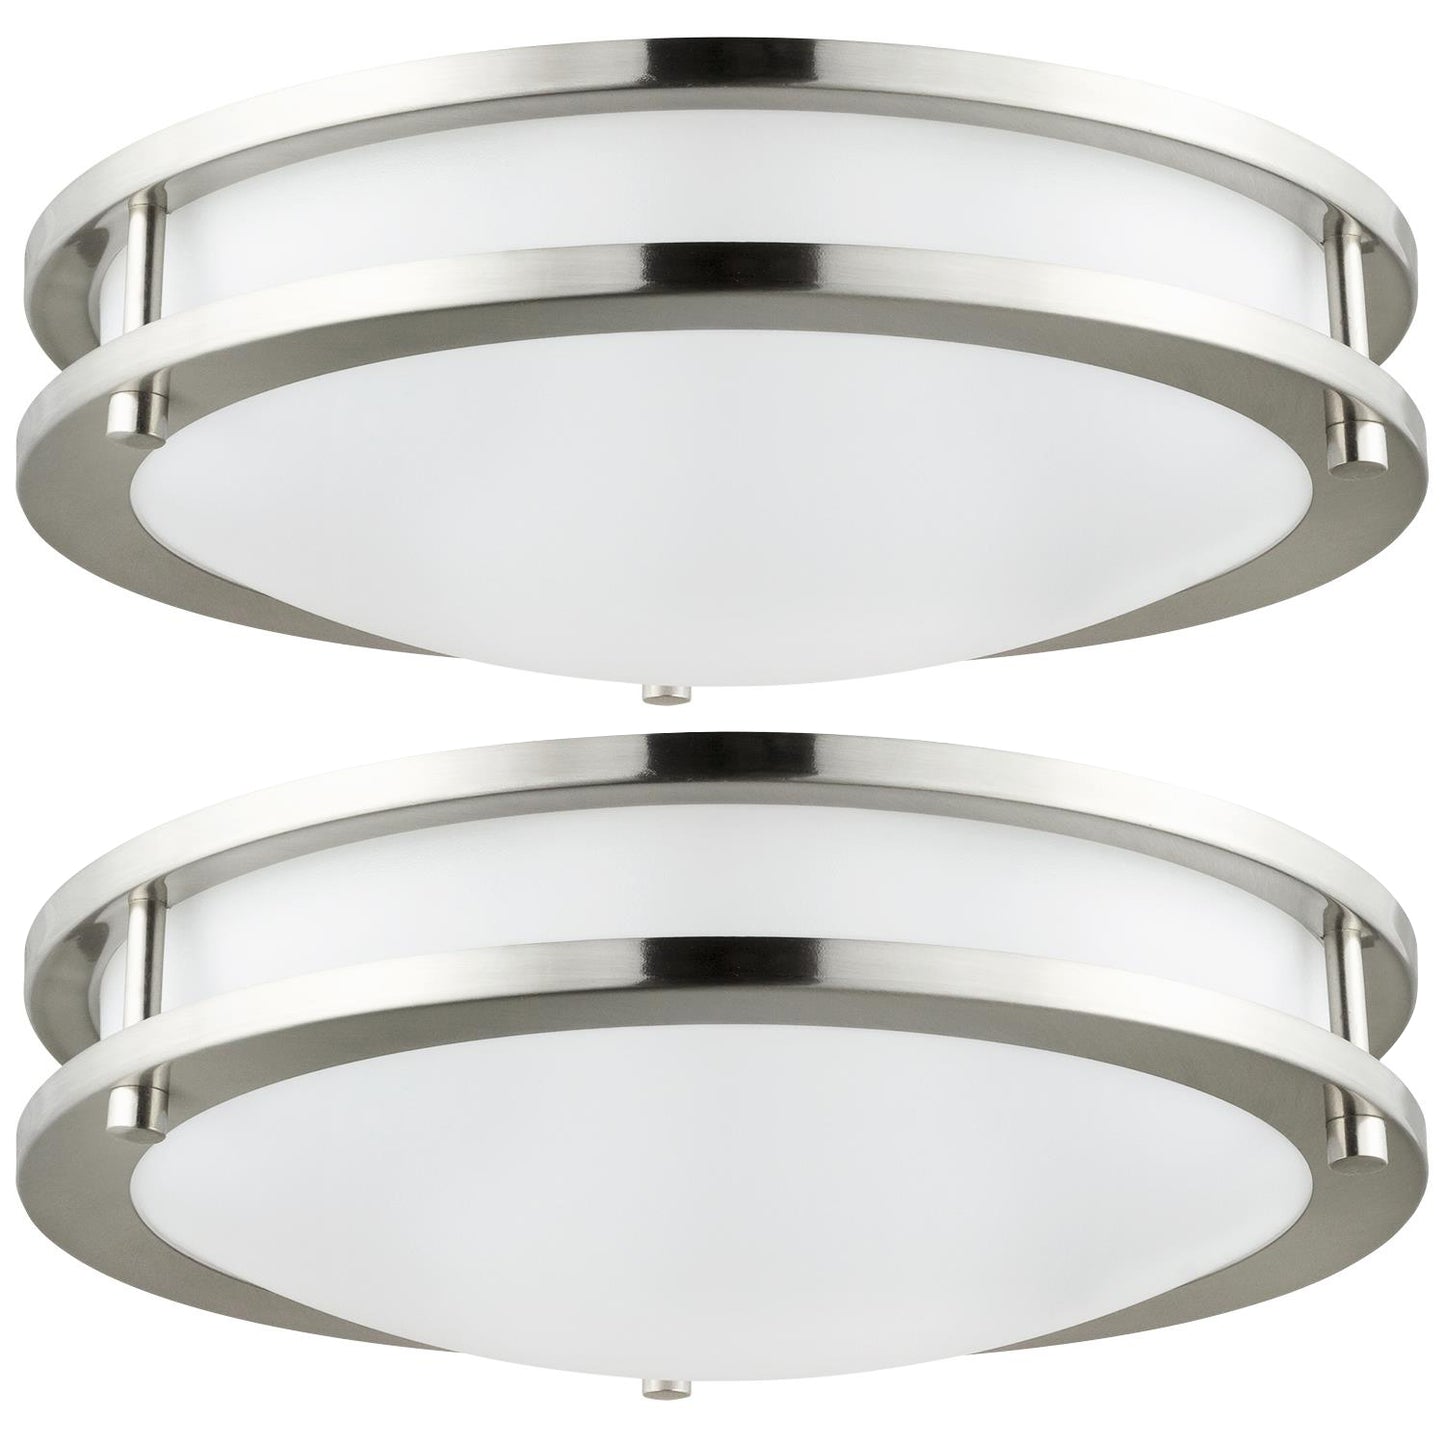 Sunlite LFX/DCO18/BN/28W/E/D/30K LED 28W 18" Decorative Brushed Nickel Ceiling Light Fixtures, 3000K Warm White